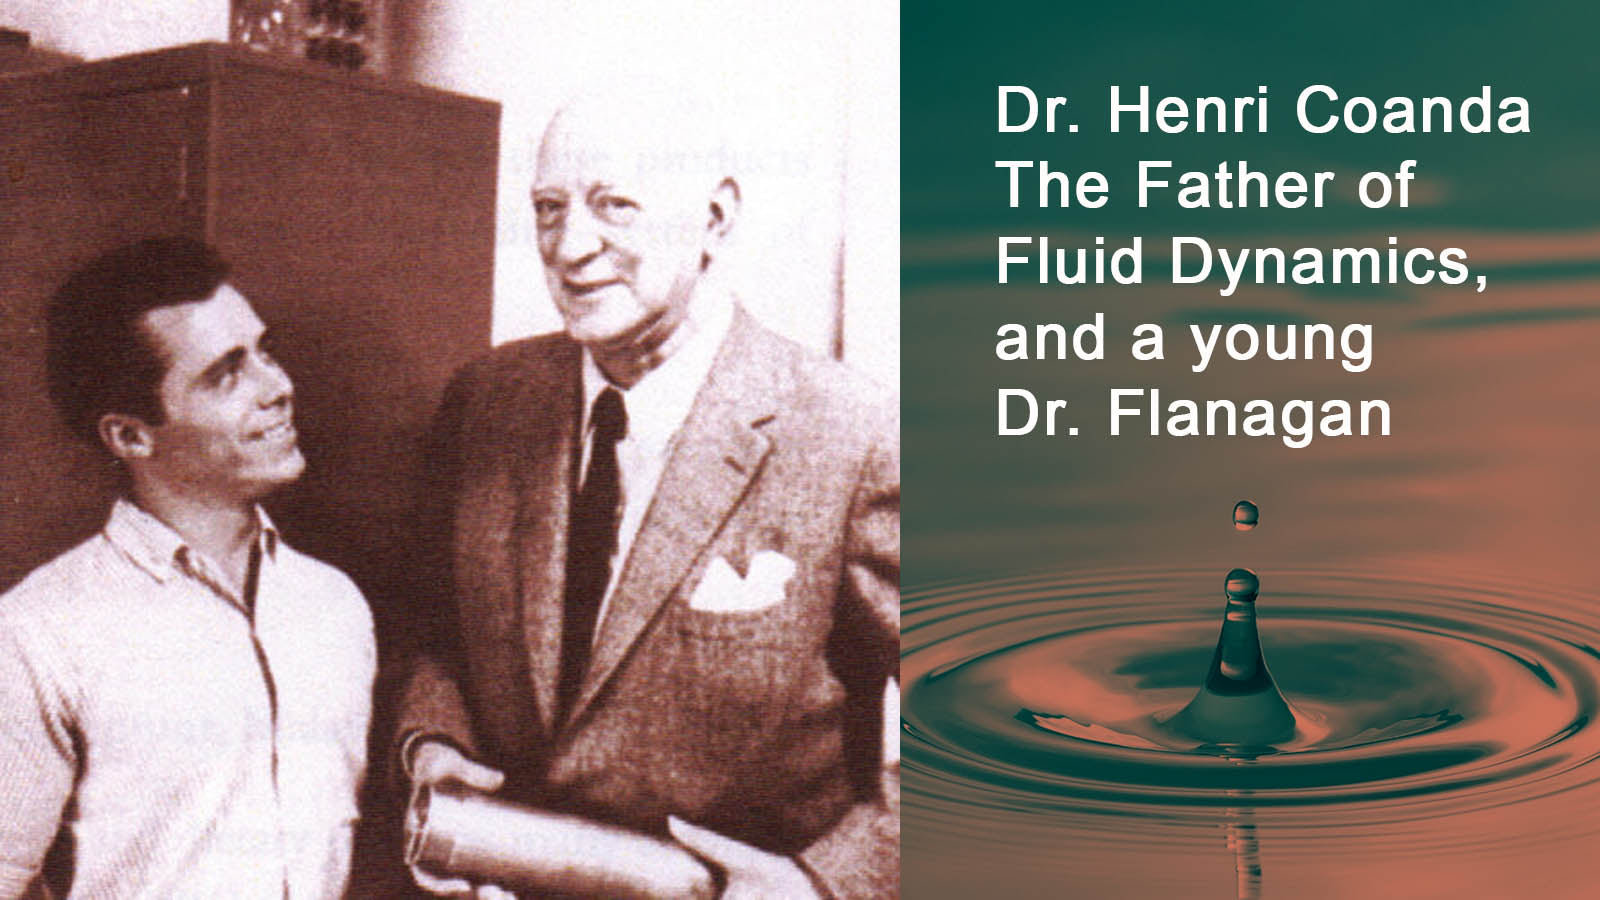 Dr. Henri Coanda and Dr Patrick Flanagan